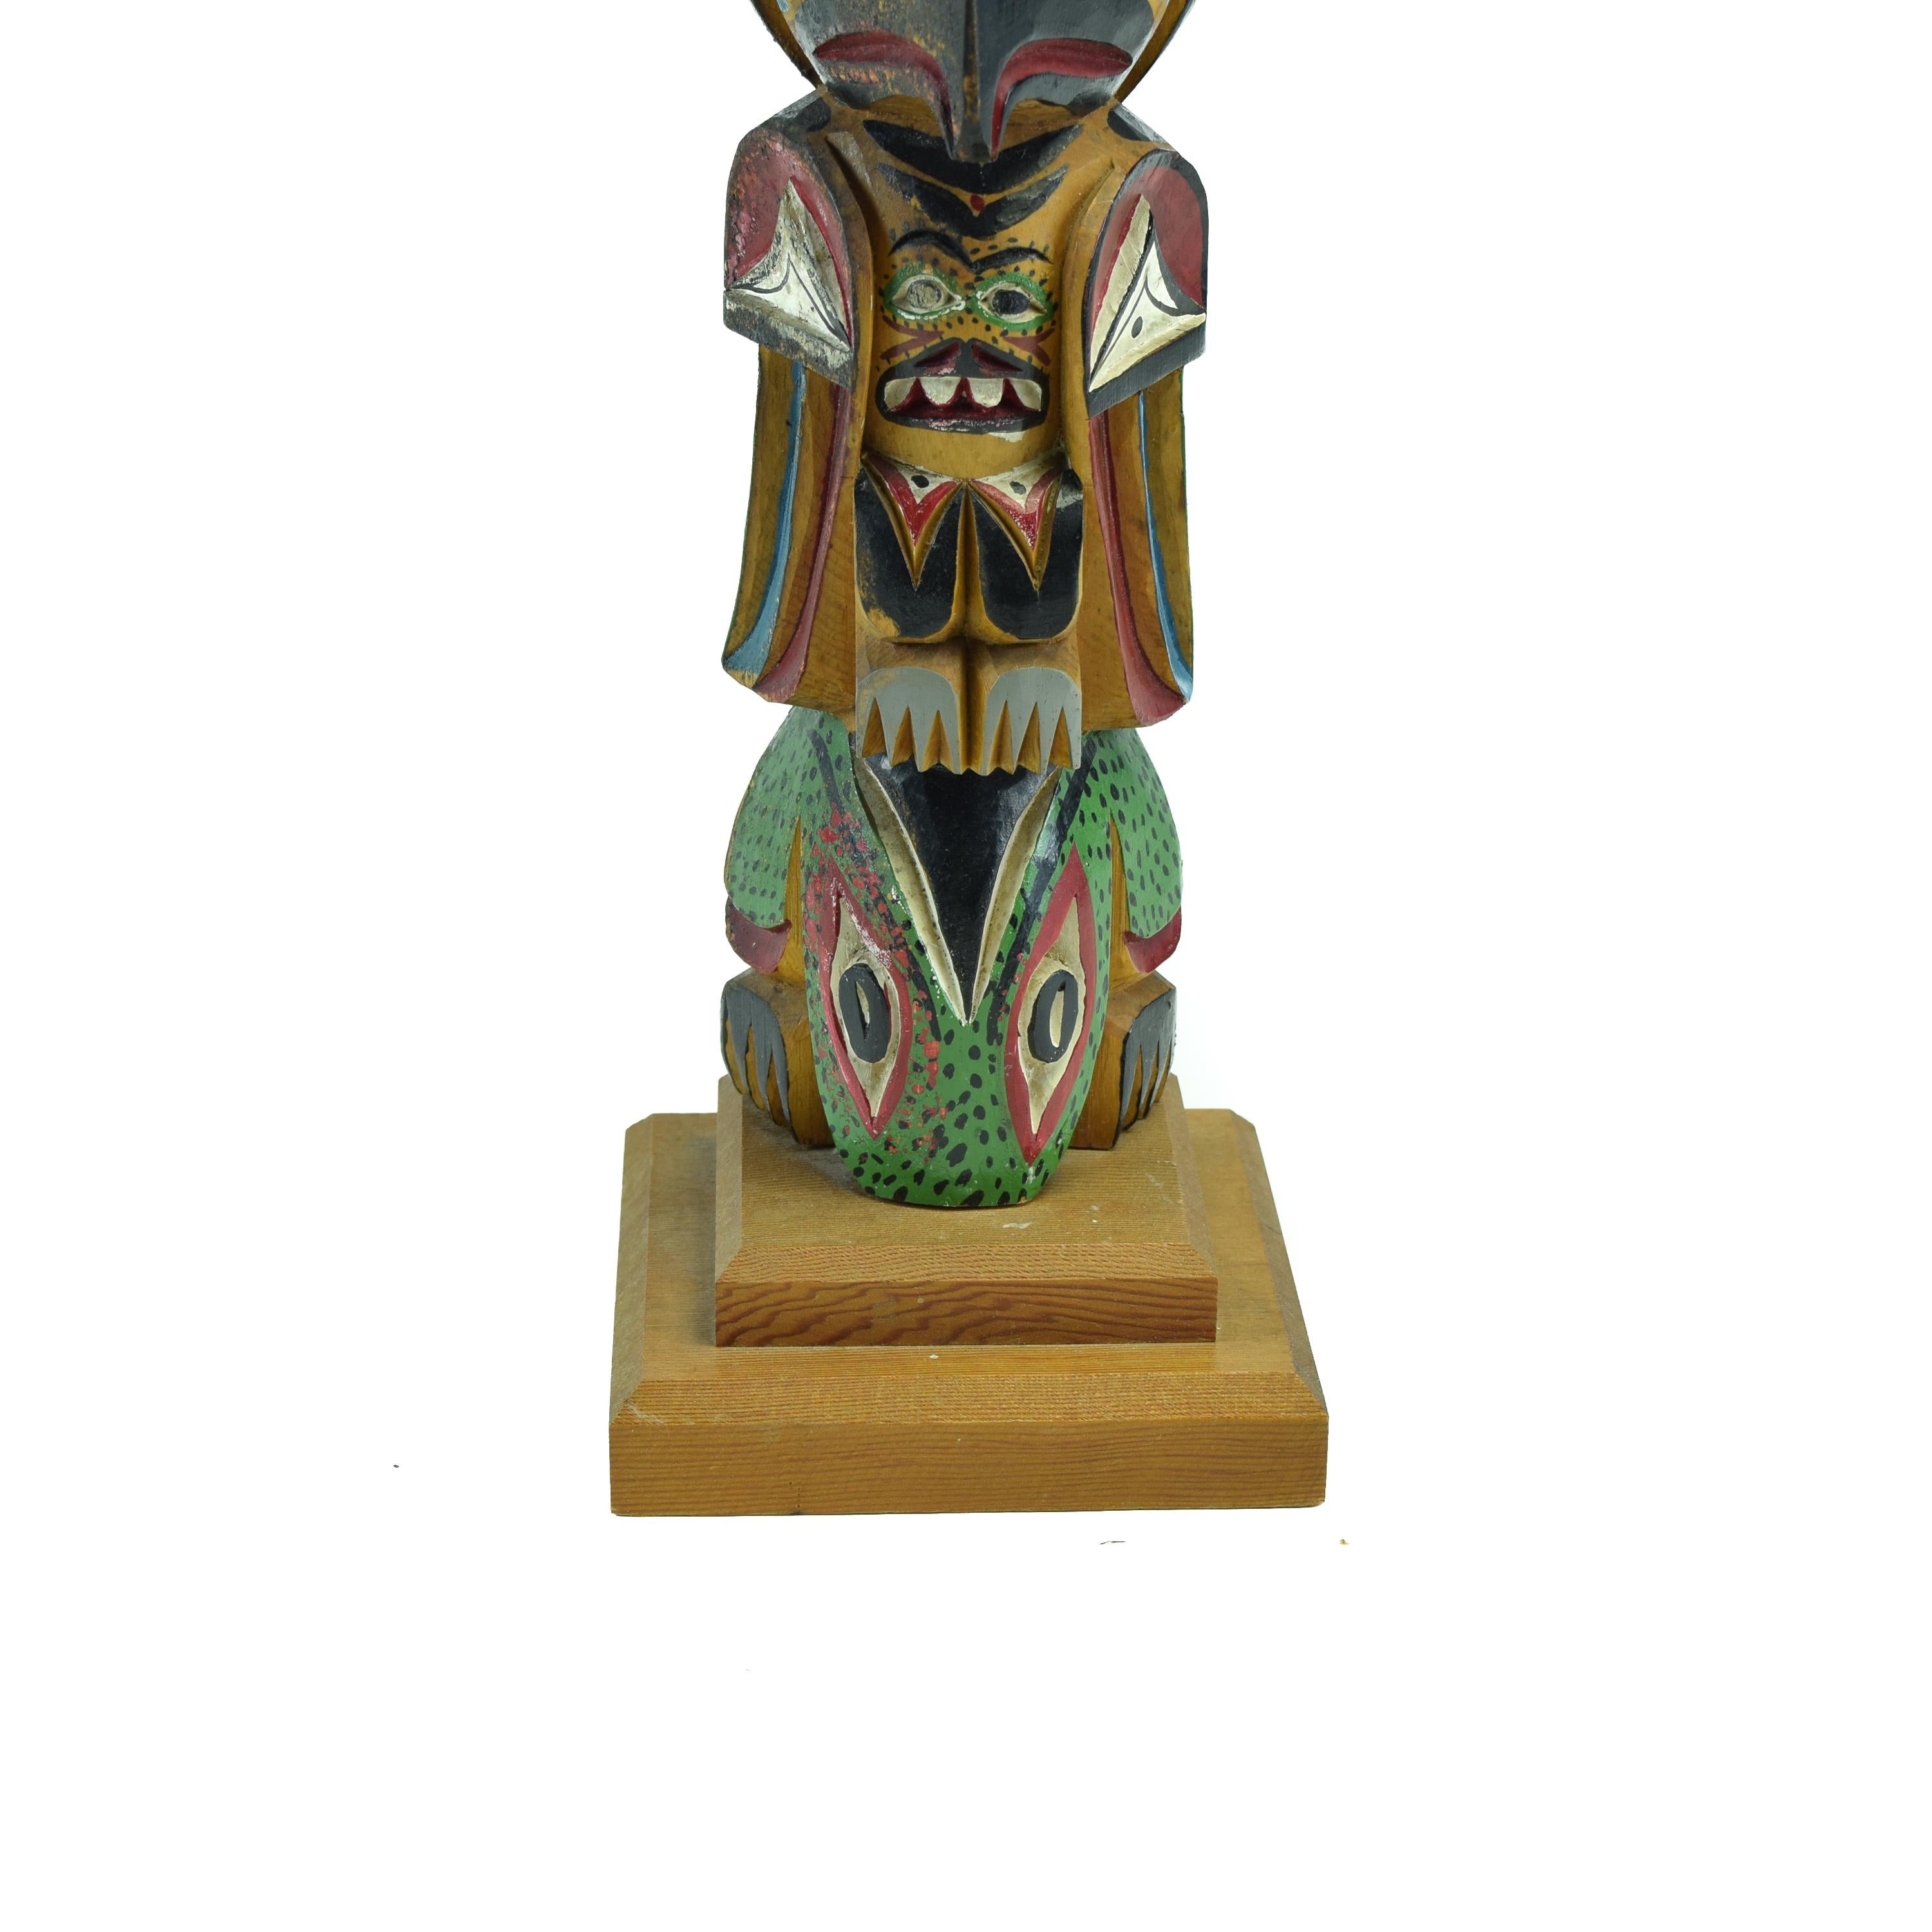 Ditidaht/Nuu-Chah-Nulth Totem von Raymond Williams (Mitte des 20. Jahrhunderts) im Angebot